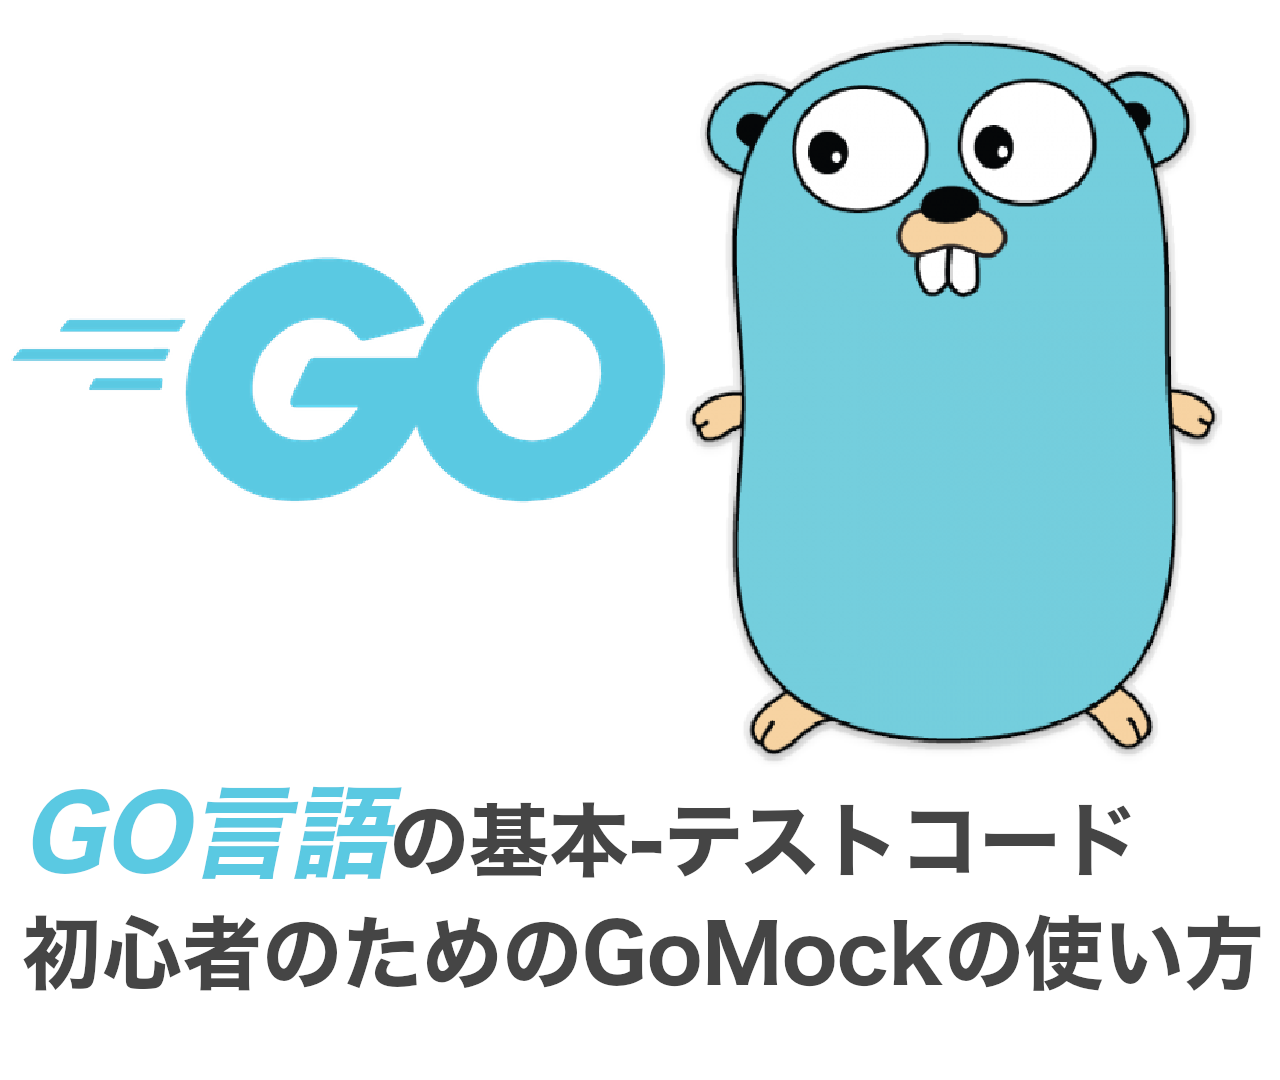 GO言語の基本-テストコード 初心者のためのgomockの使い方